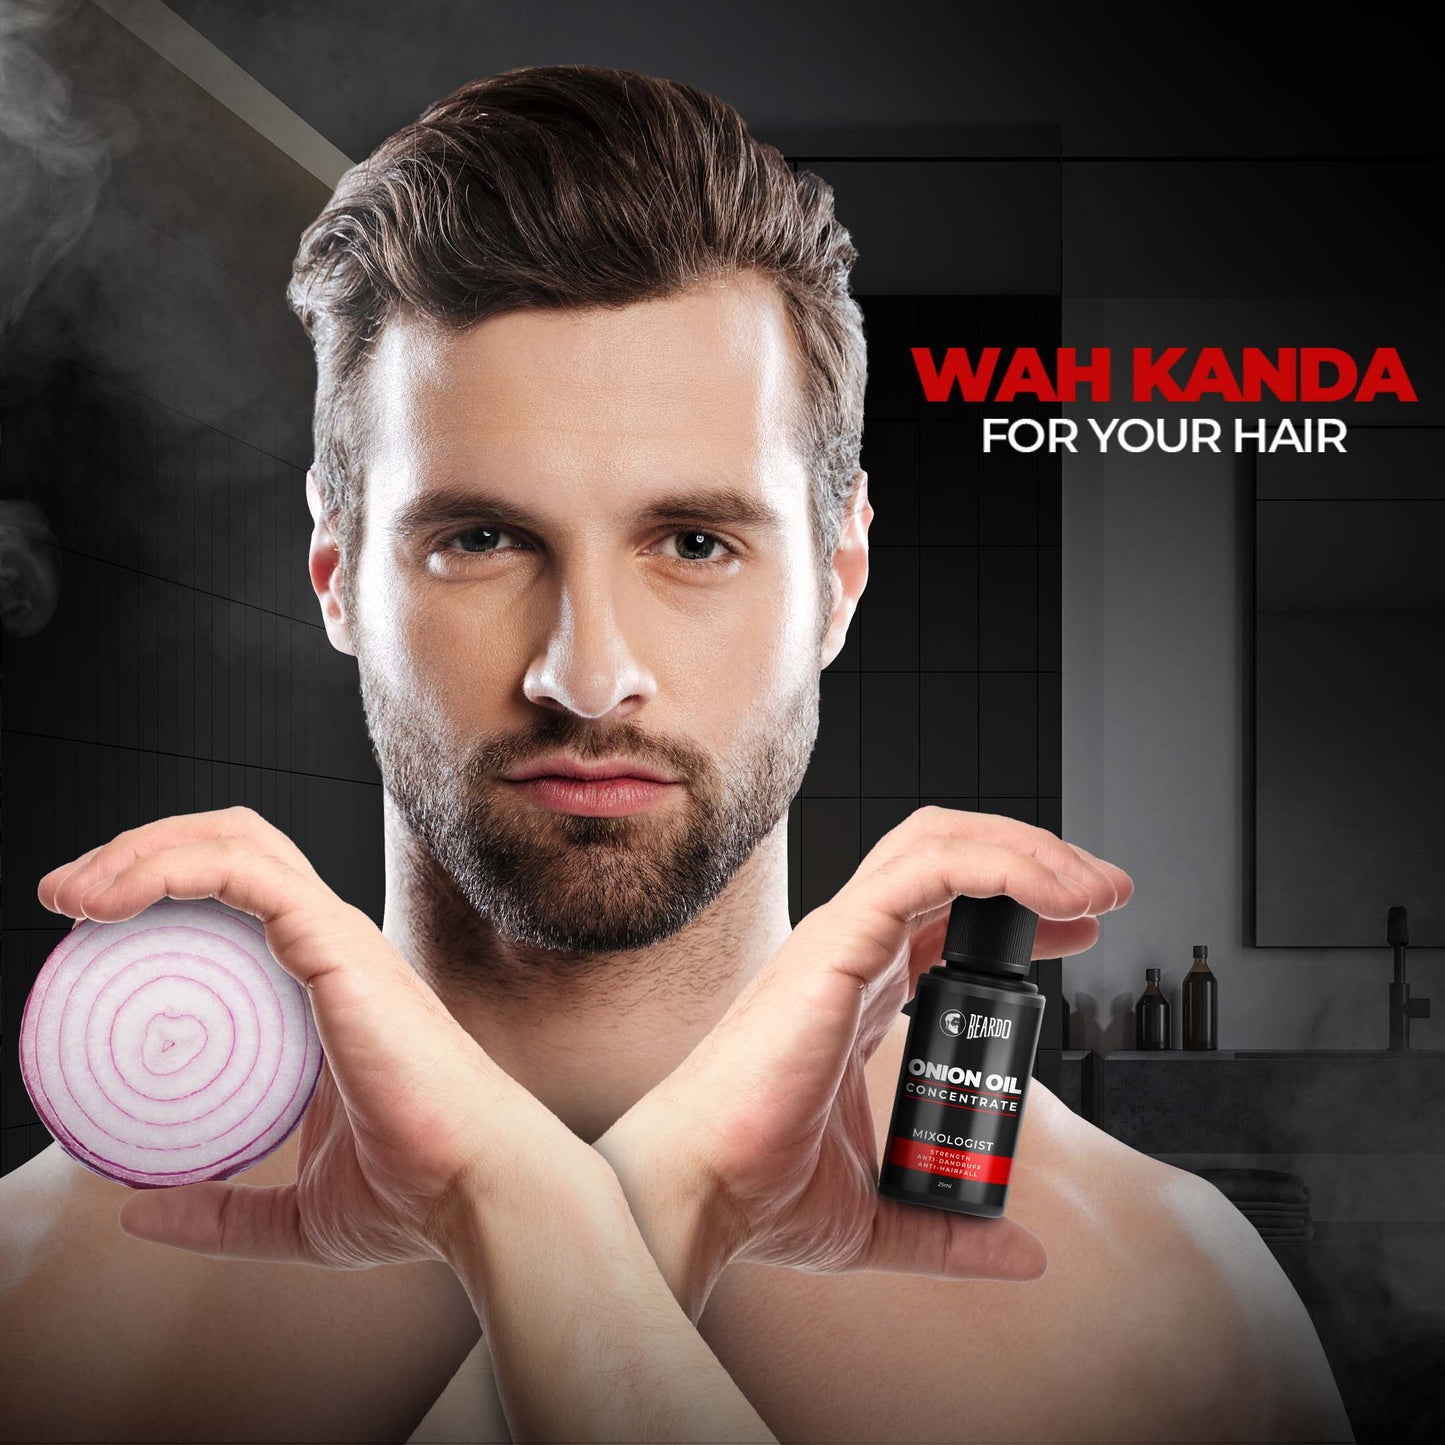 wah kanda for your hair